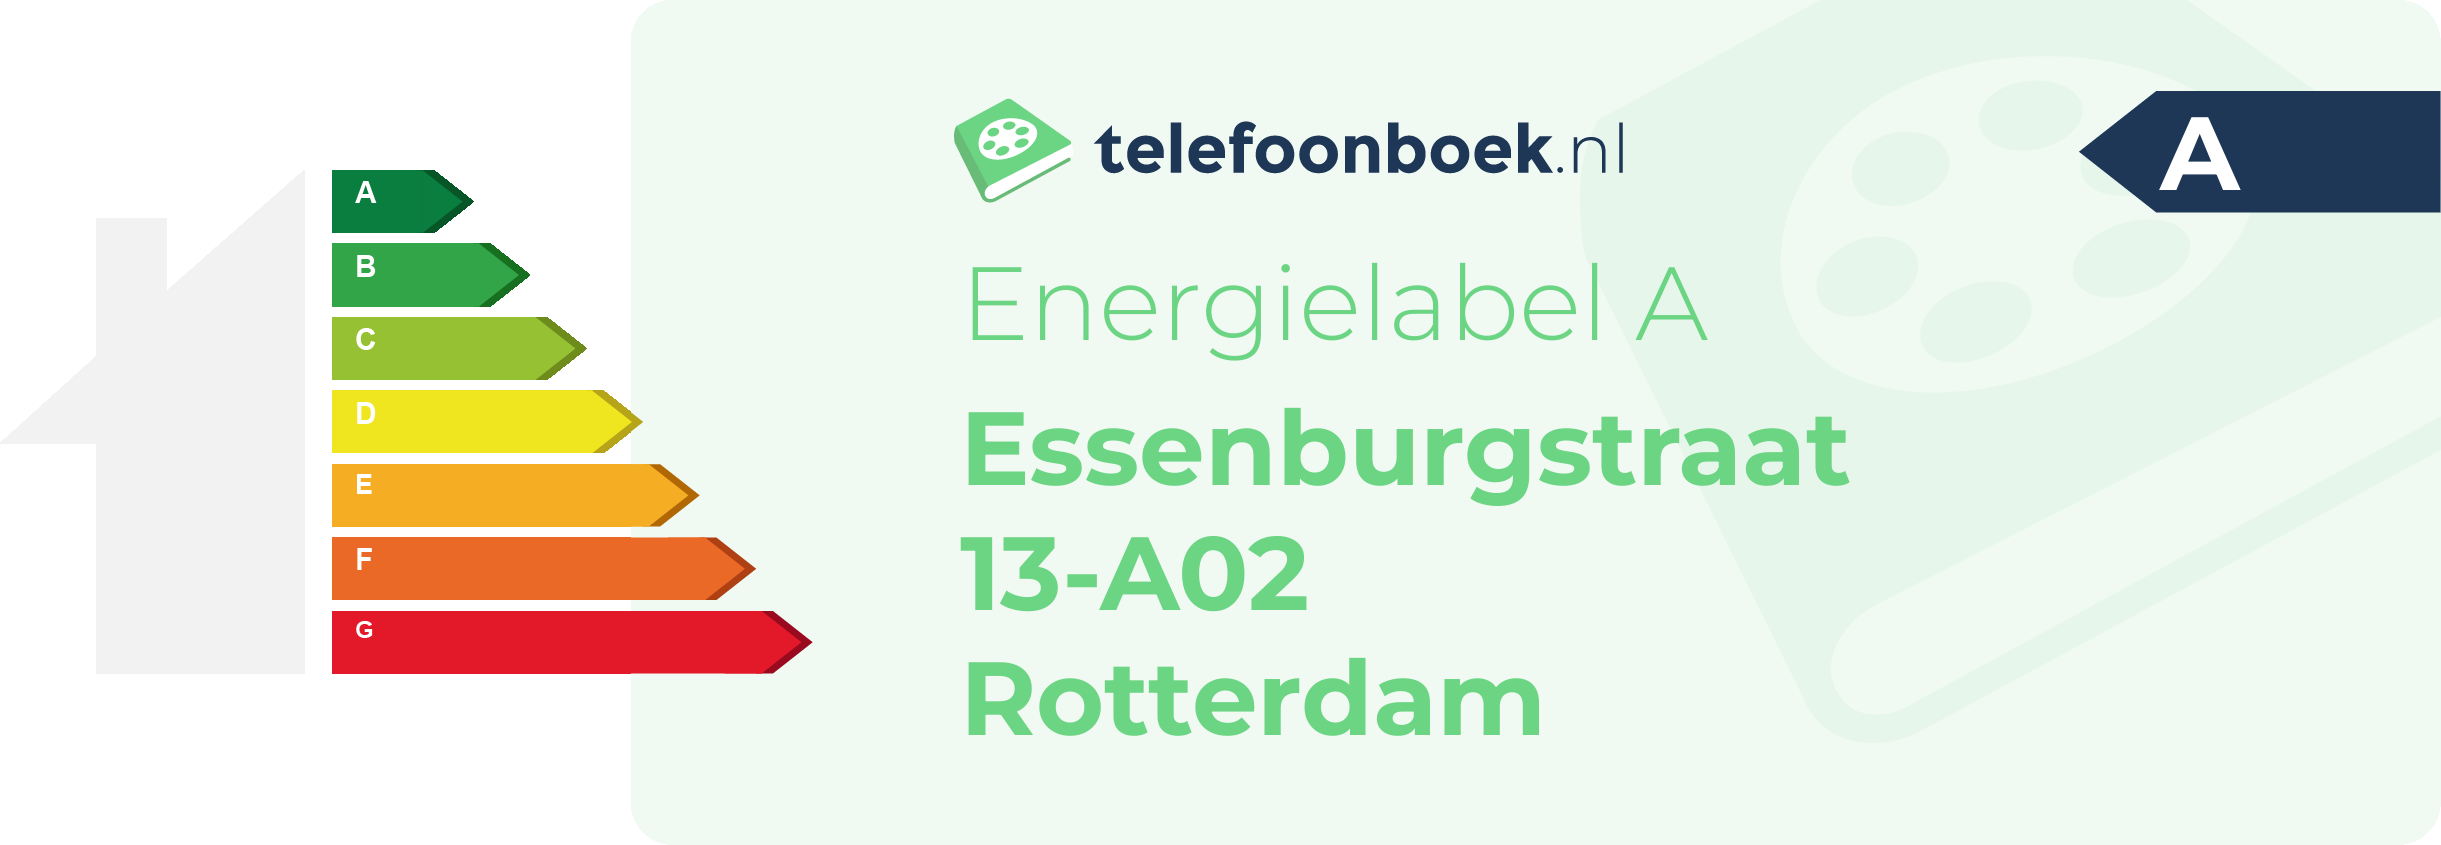 Energielabel Essenburgstraat 13-A02 Rotterdam